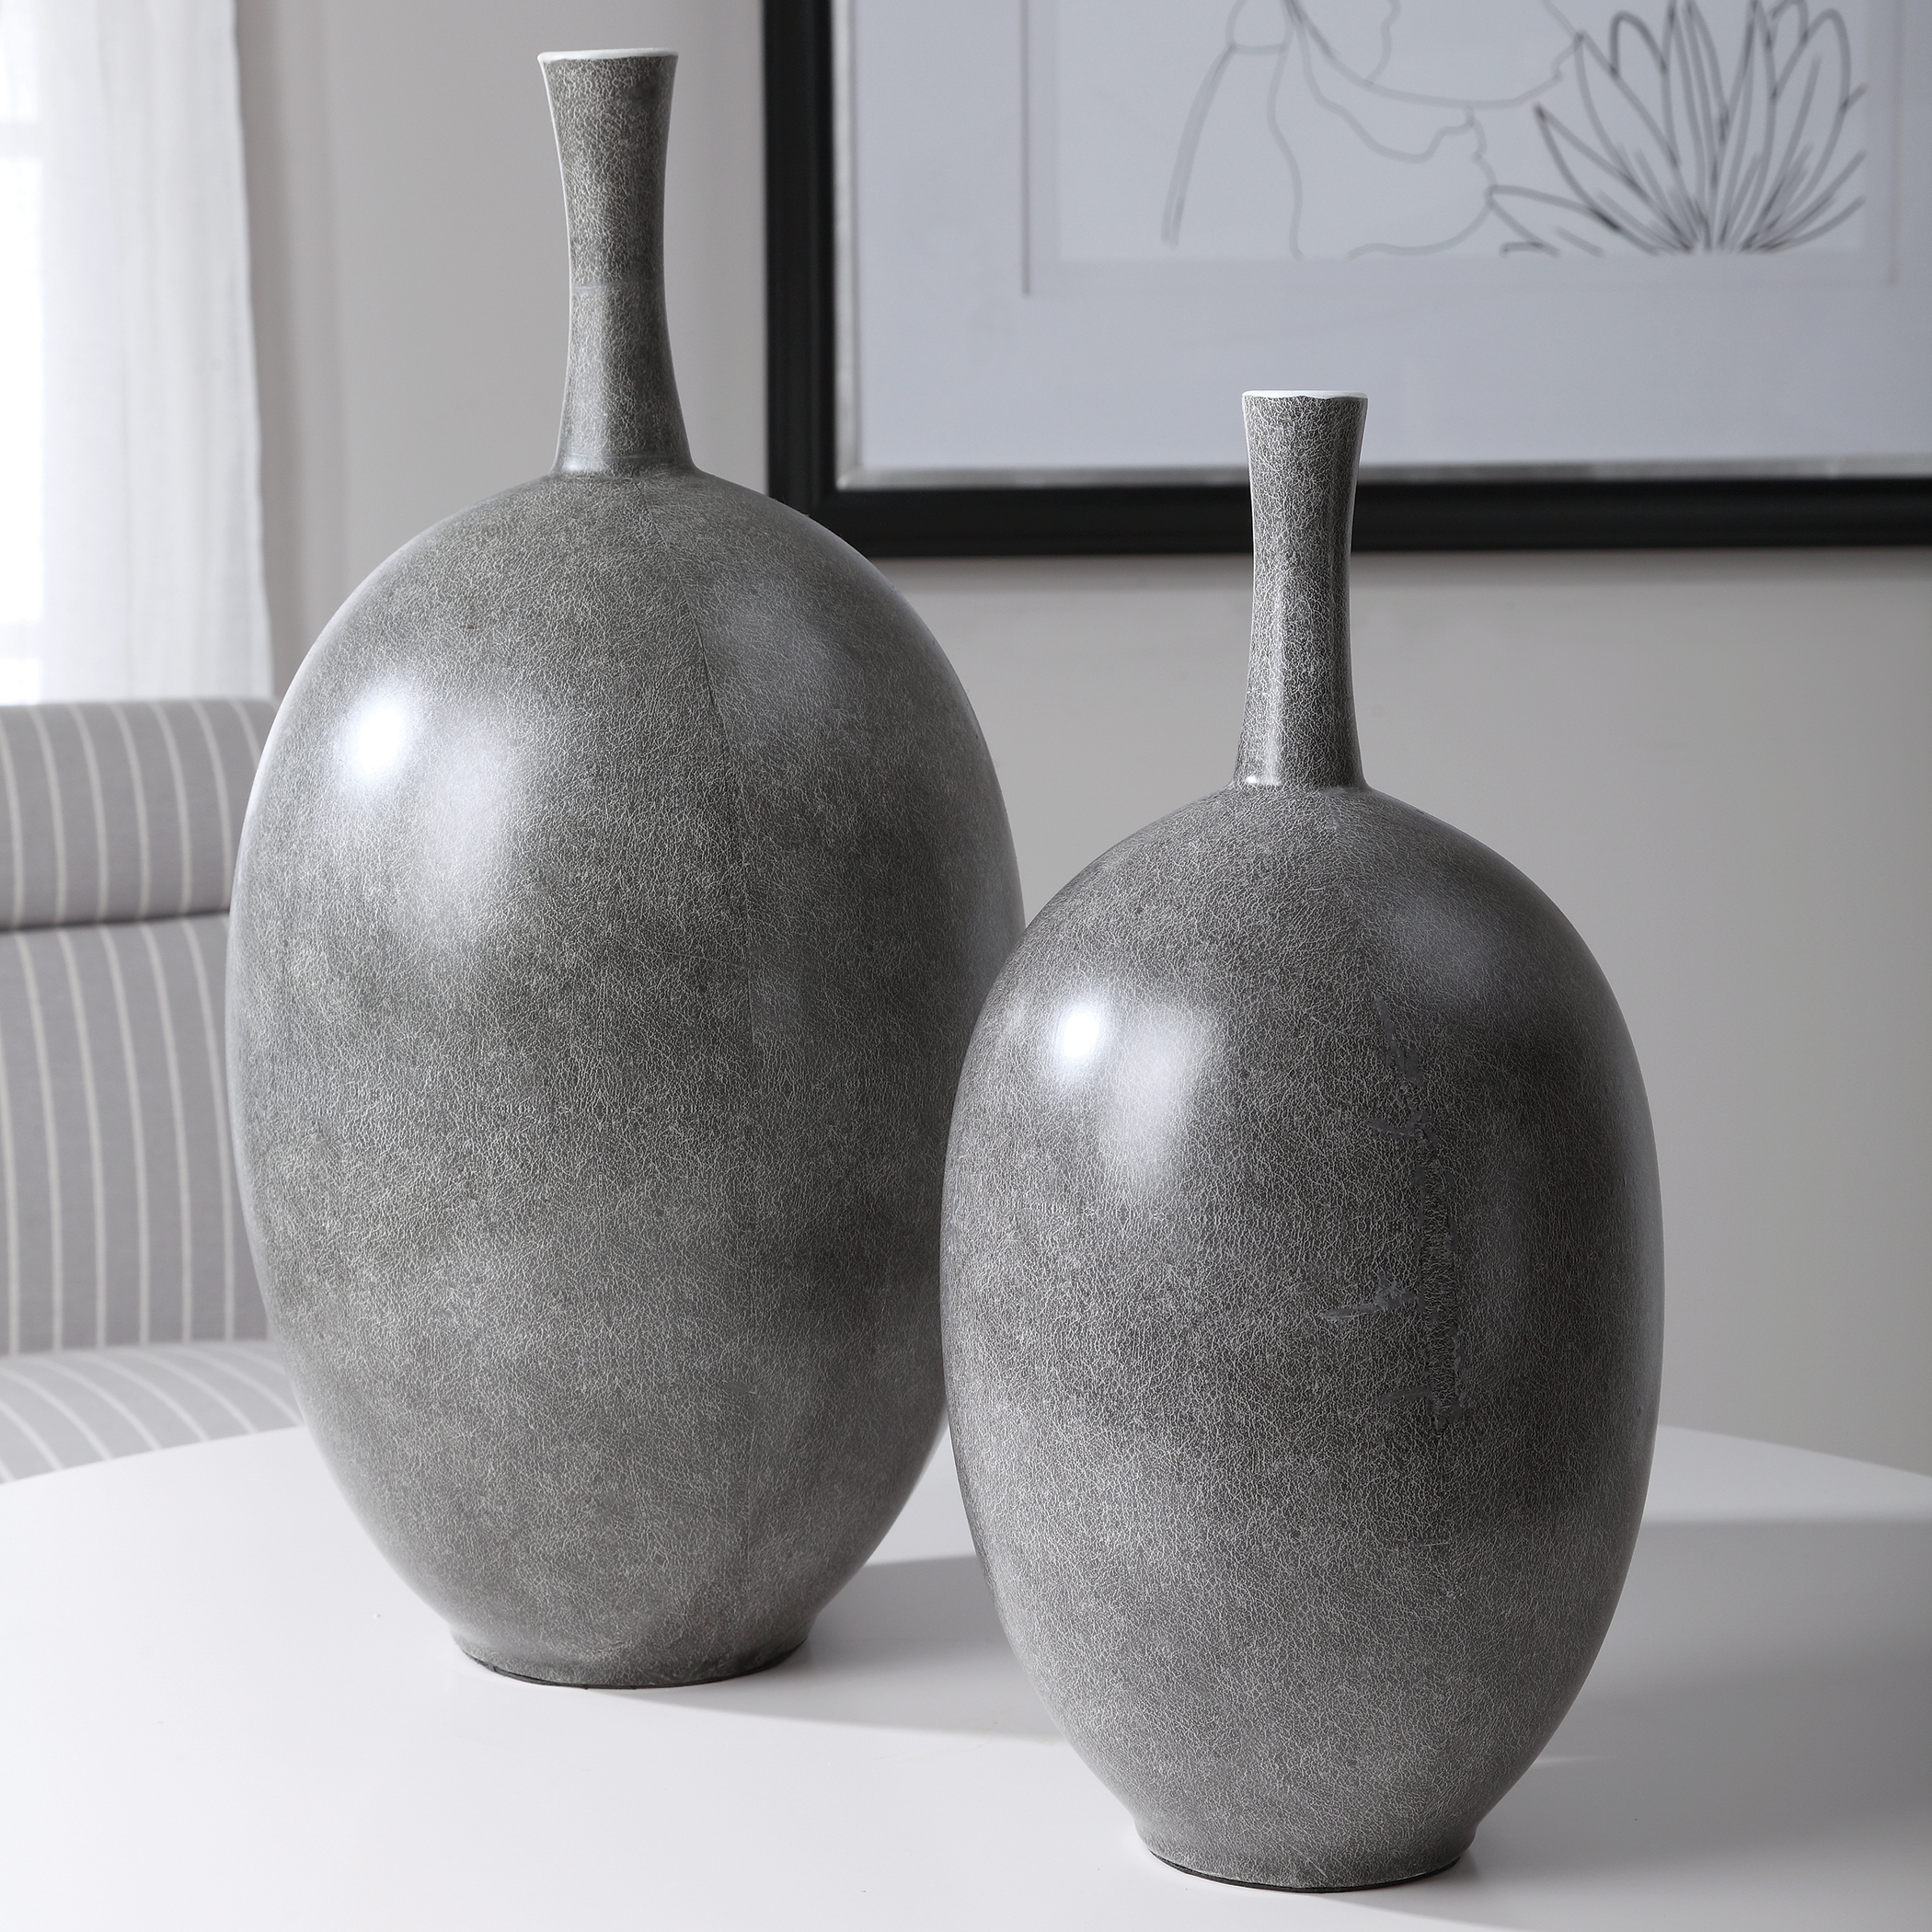 Riordan Vases, Set of 2 - Image 1